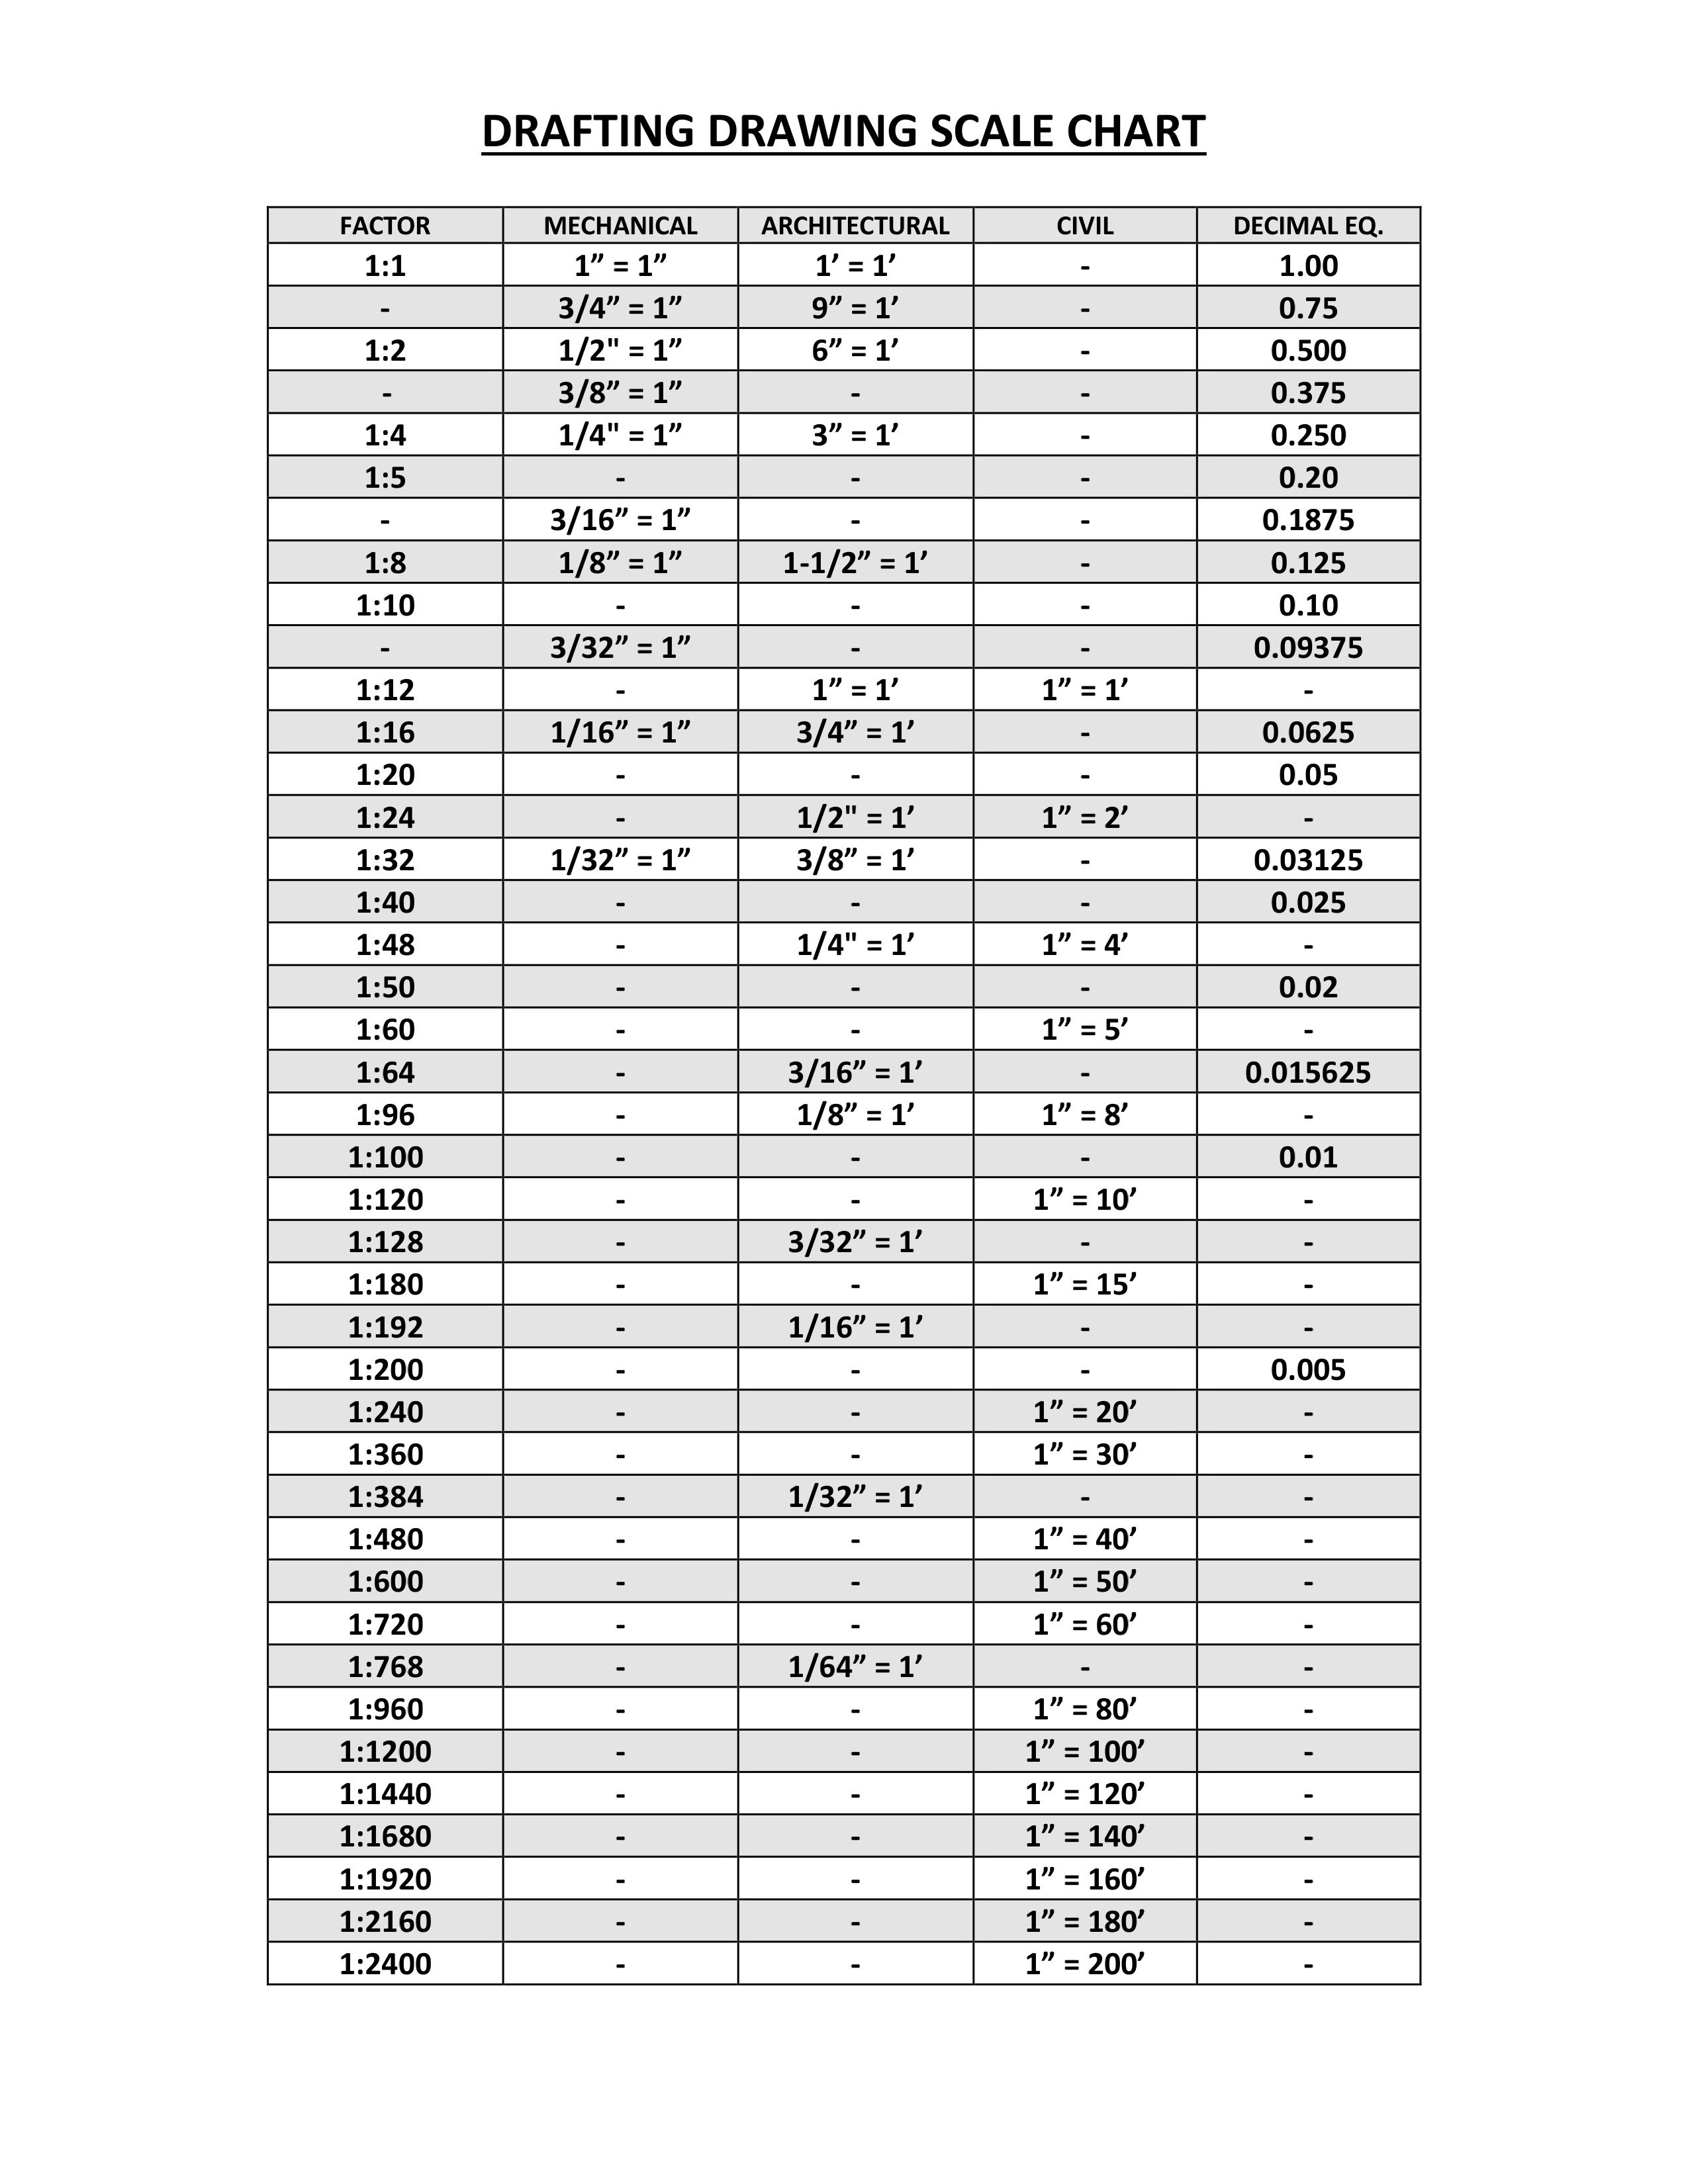 Autocad Xp Scale Chart